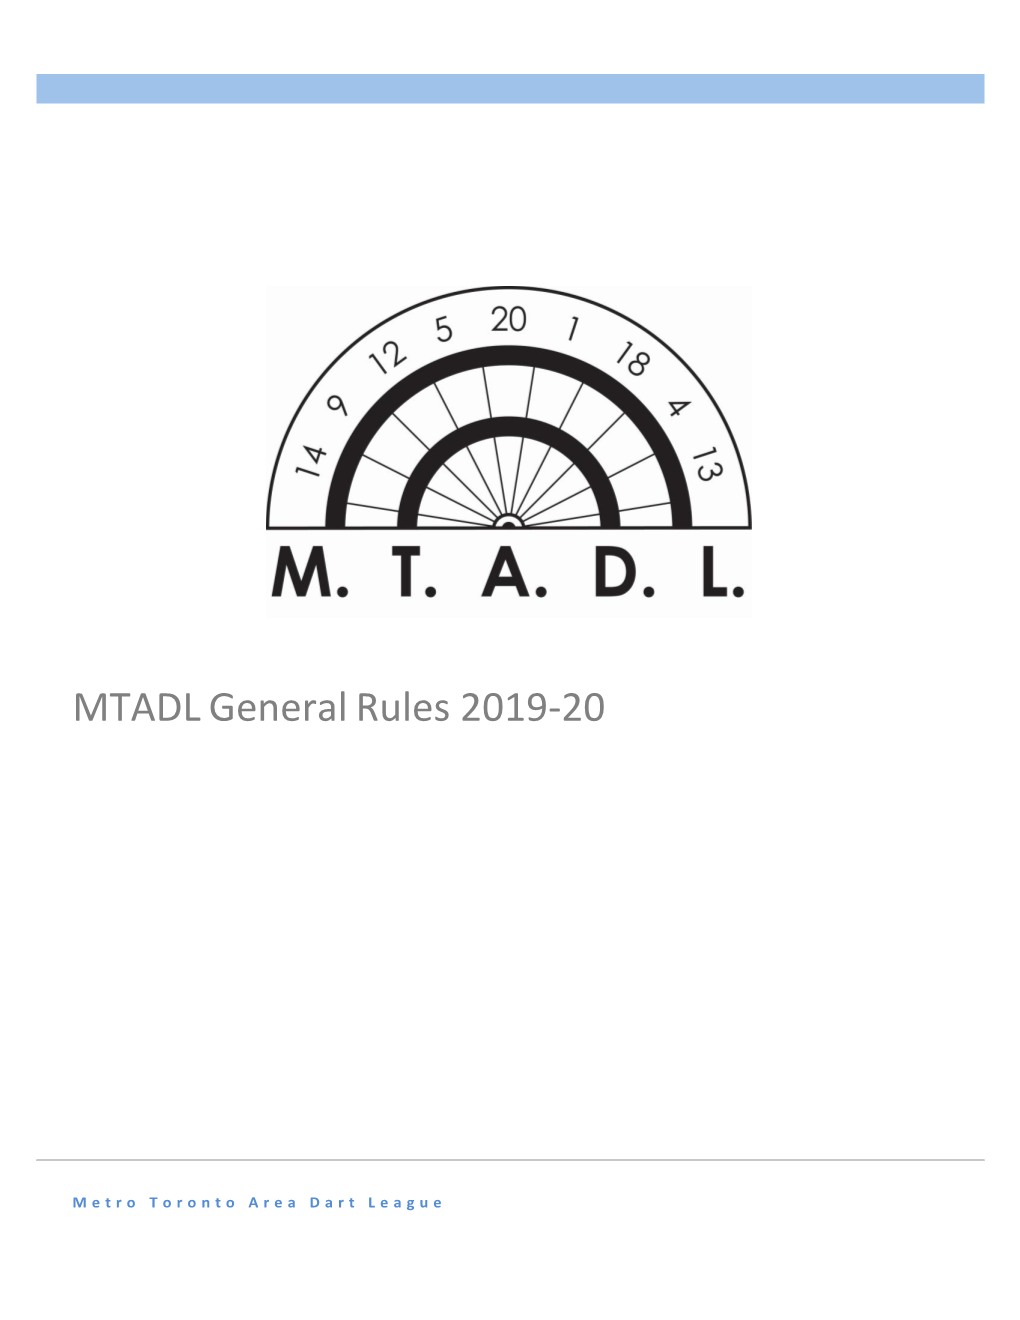 MTADL General Rules 2019-20